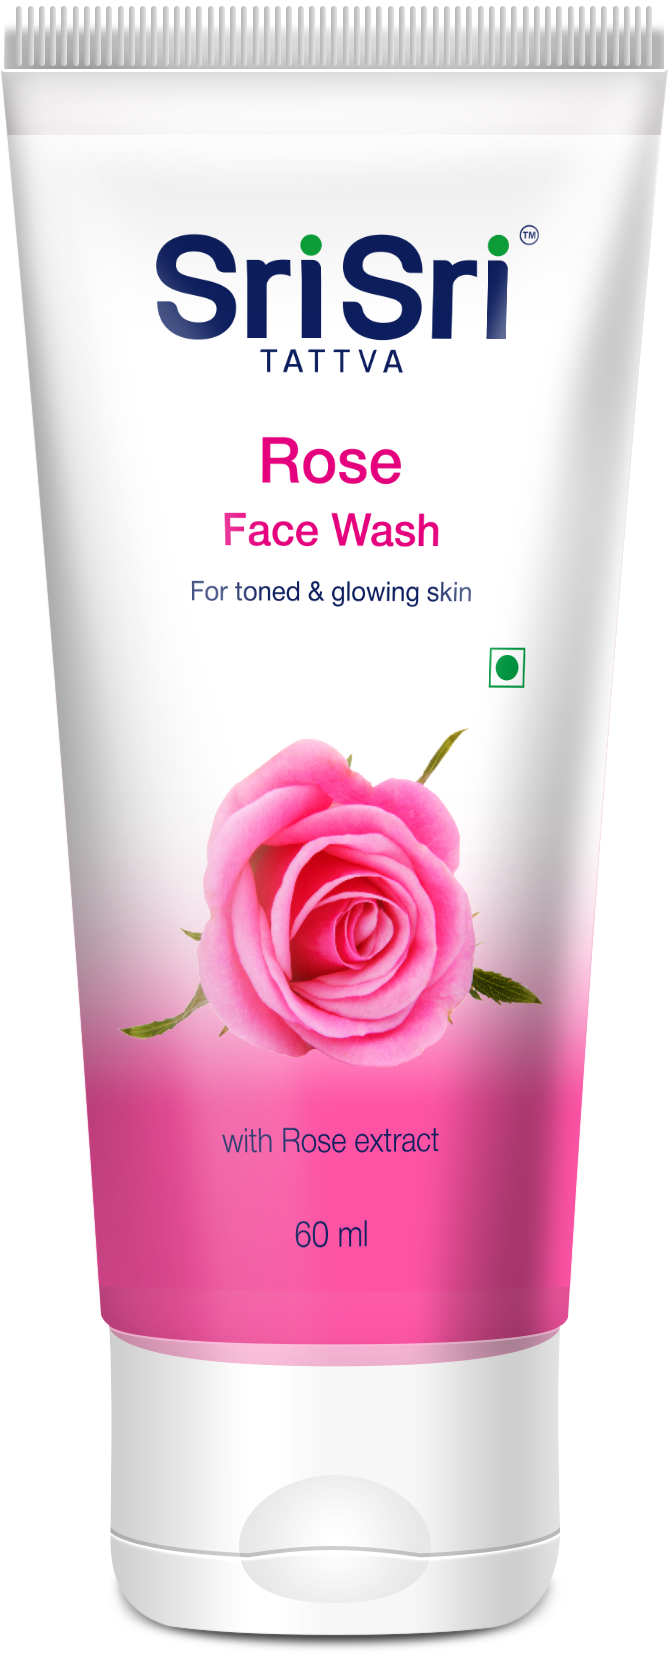 Buy Sri Sri Tattva Rose Face Wash at Best Price Online